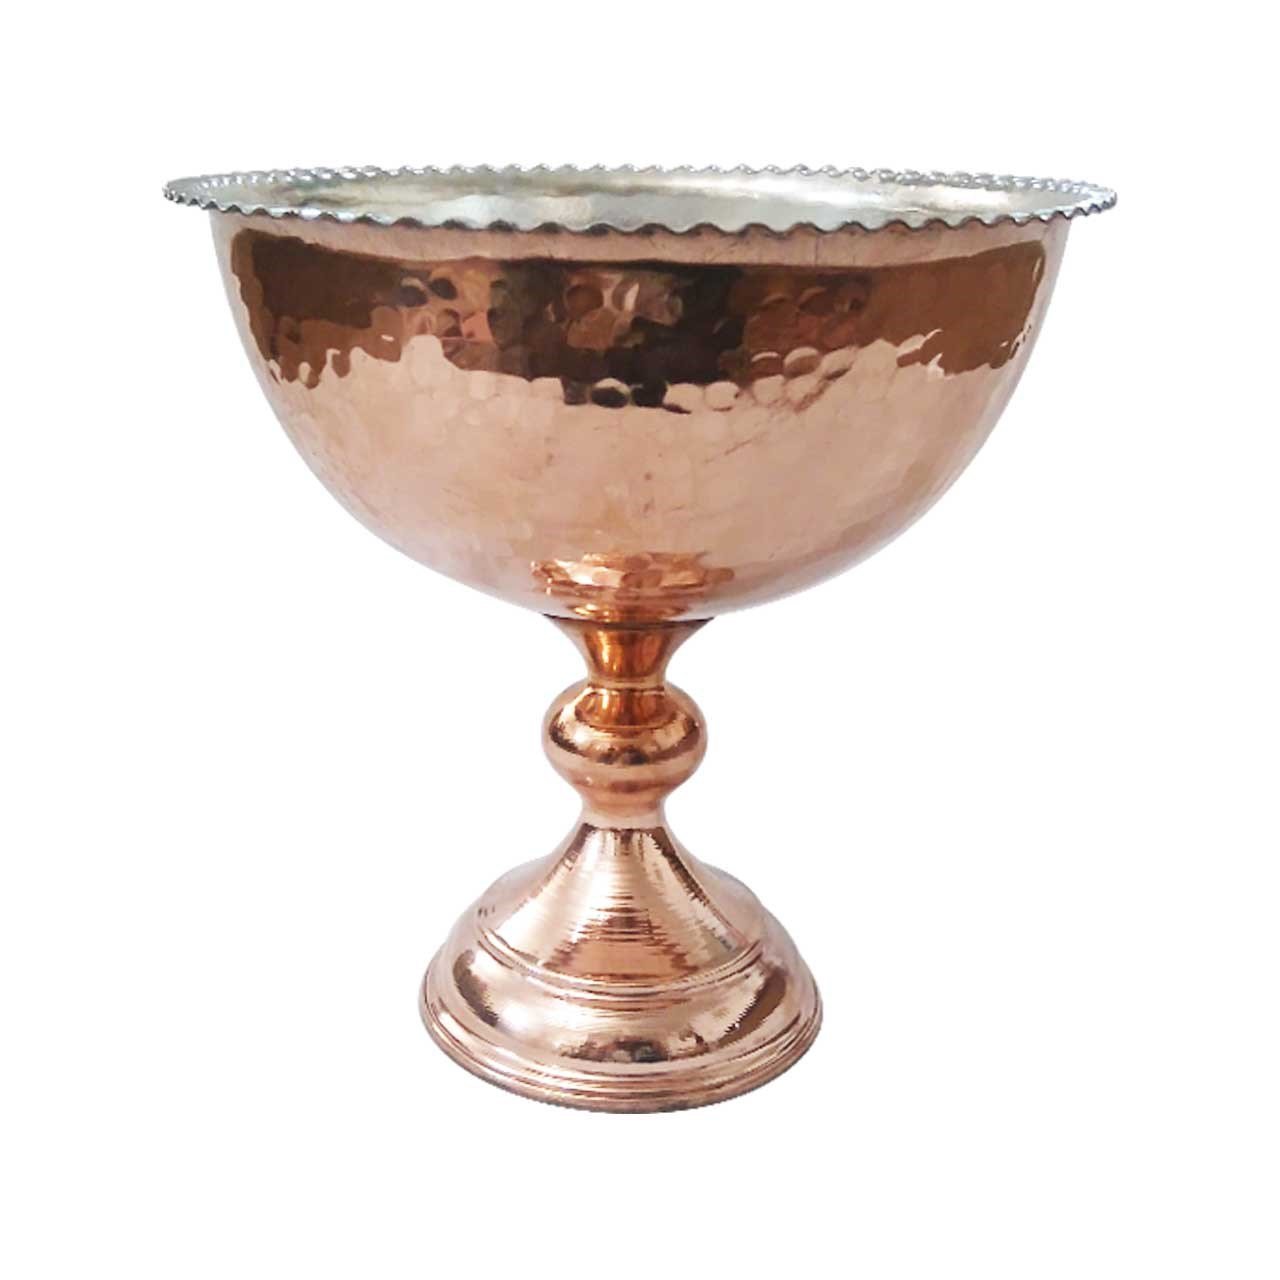 Handicraft Copper bowl model 1385 large size,buy copper handicrafts,buy copper goods